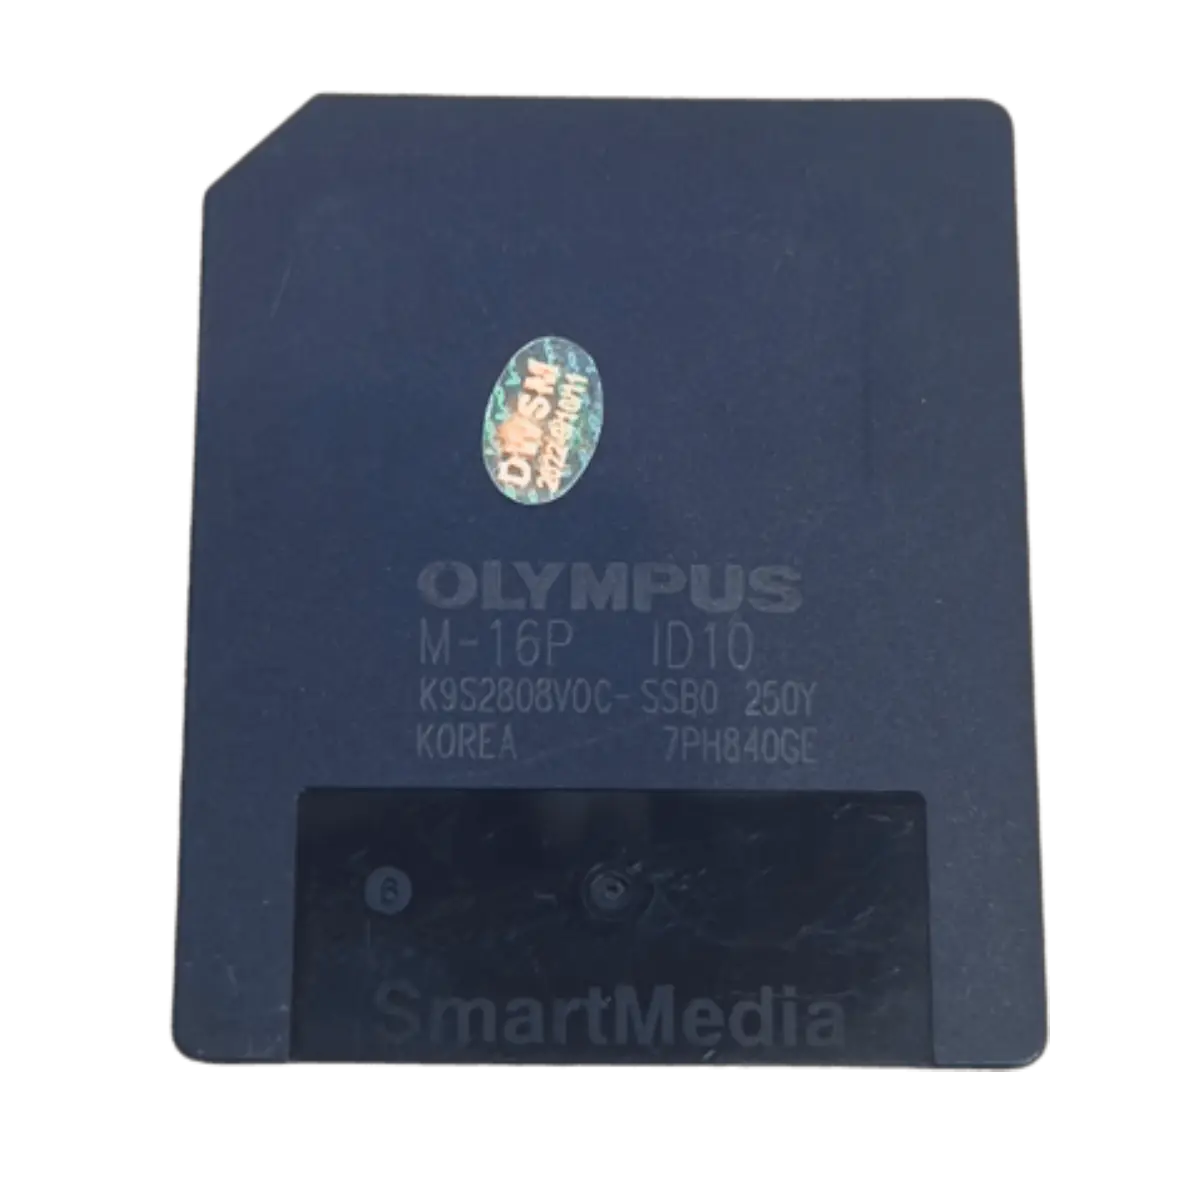 Olympus M-16P-1D10 Smart-Media-Speicherkarte